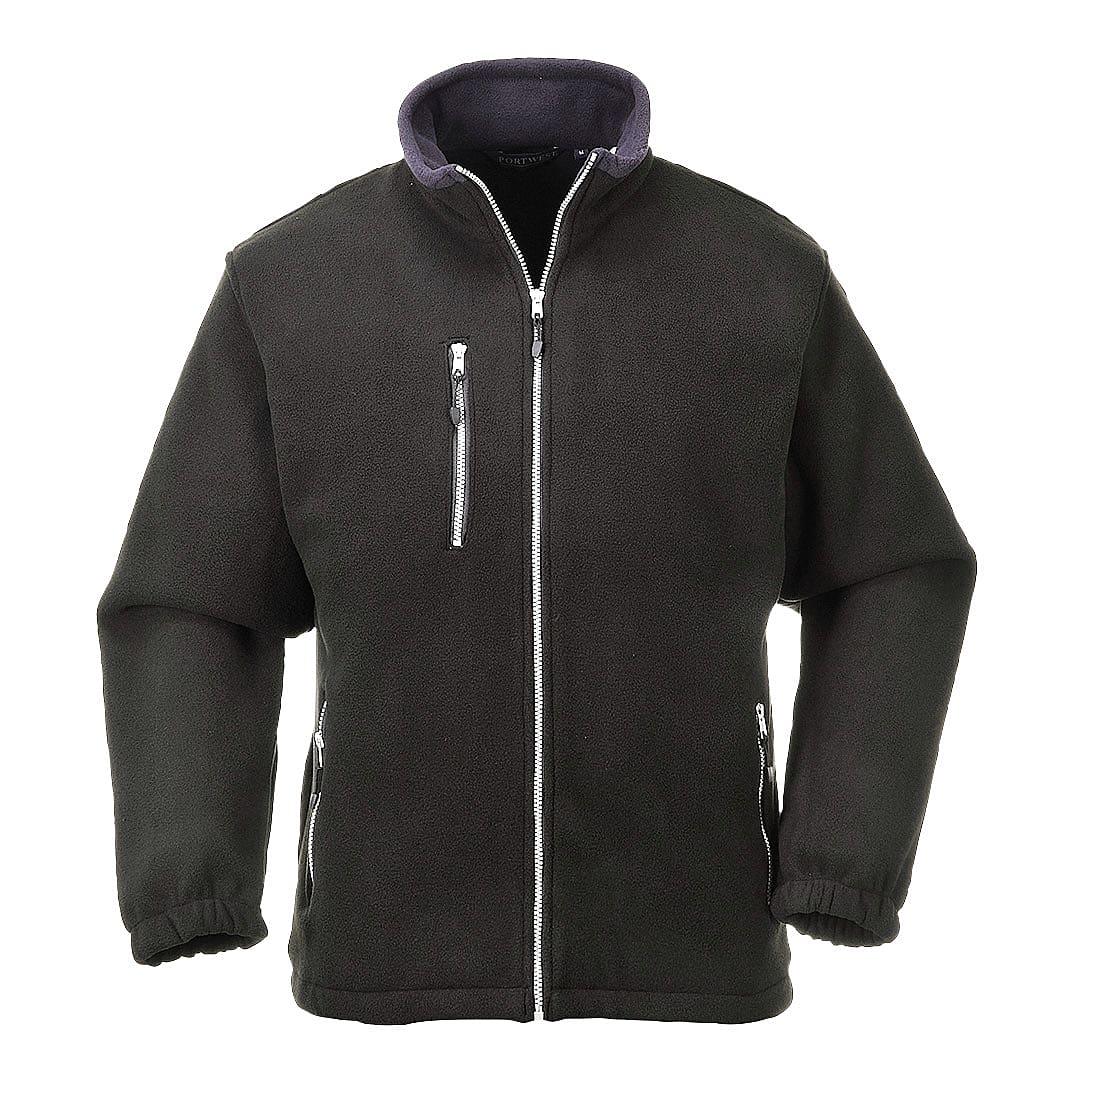 Portwest City Fleece Jacket in Black (Product Code: F401)